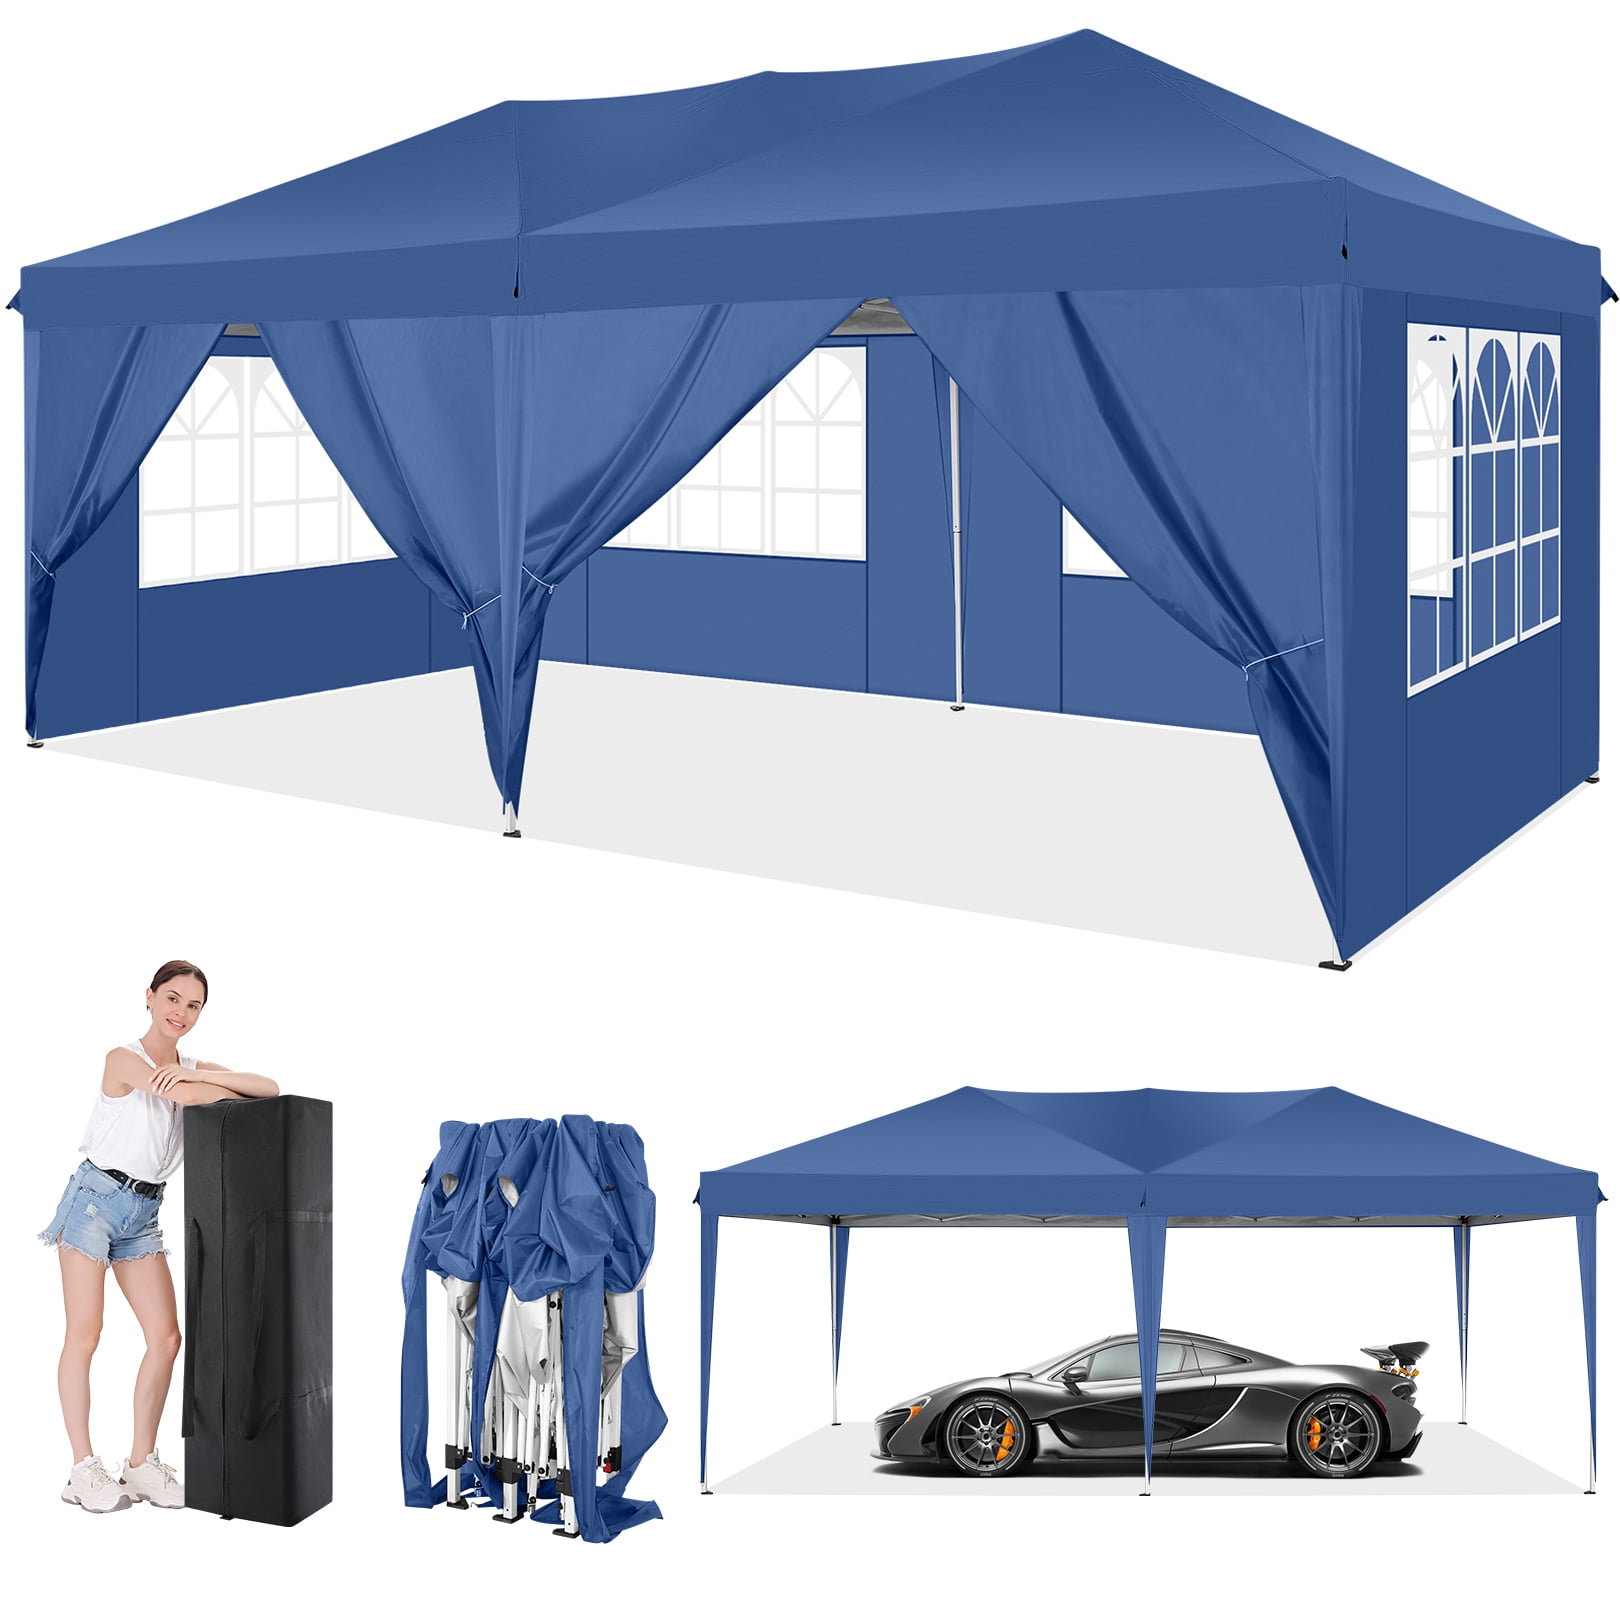 YUEBO Canopy 10' x 20' Pop Up Canopy Tent Heavy Duty Waterproof